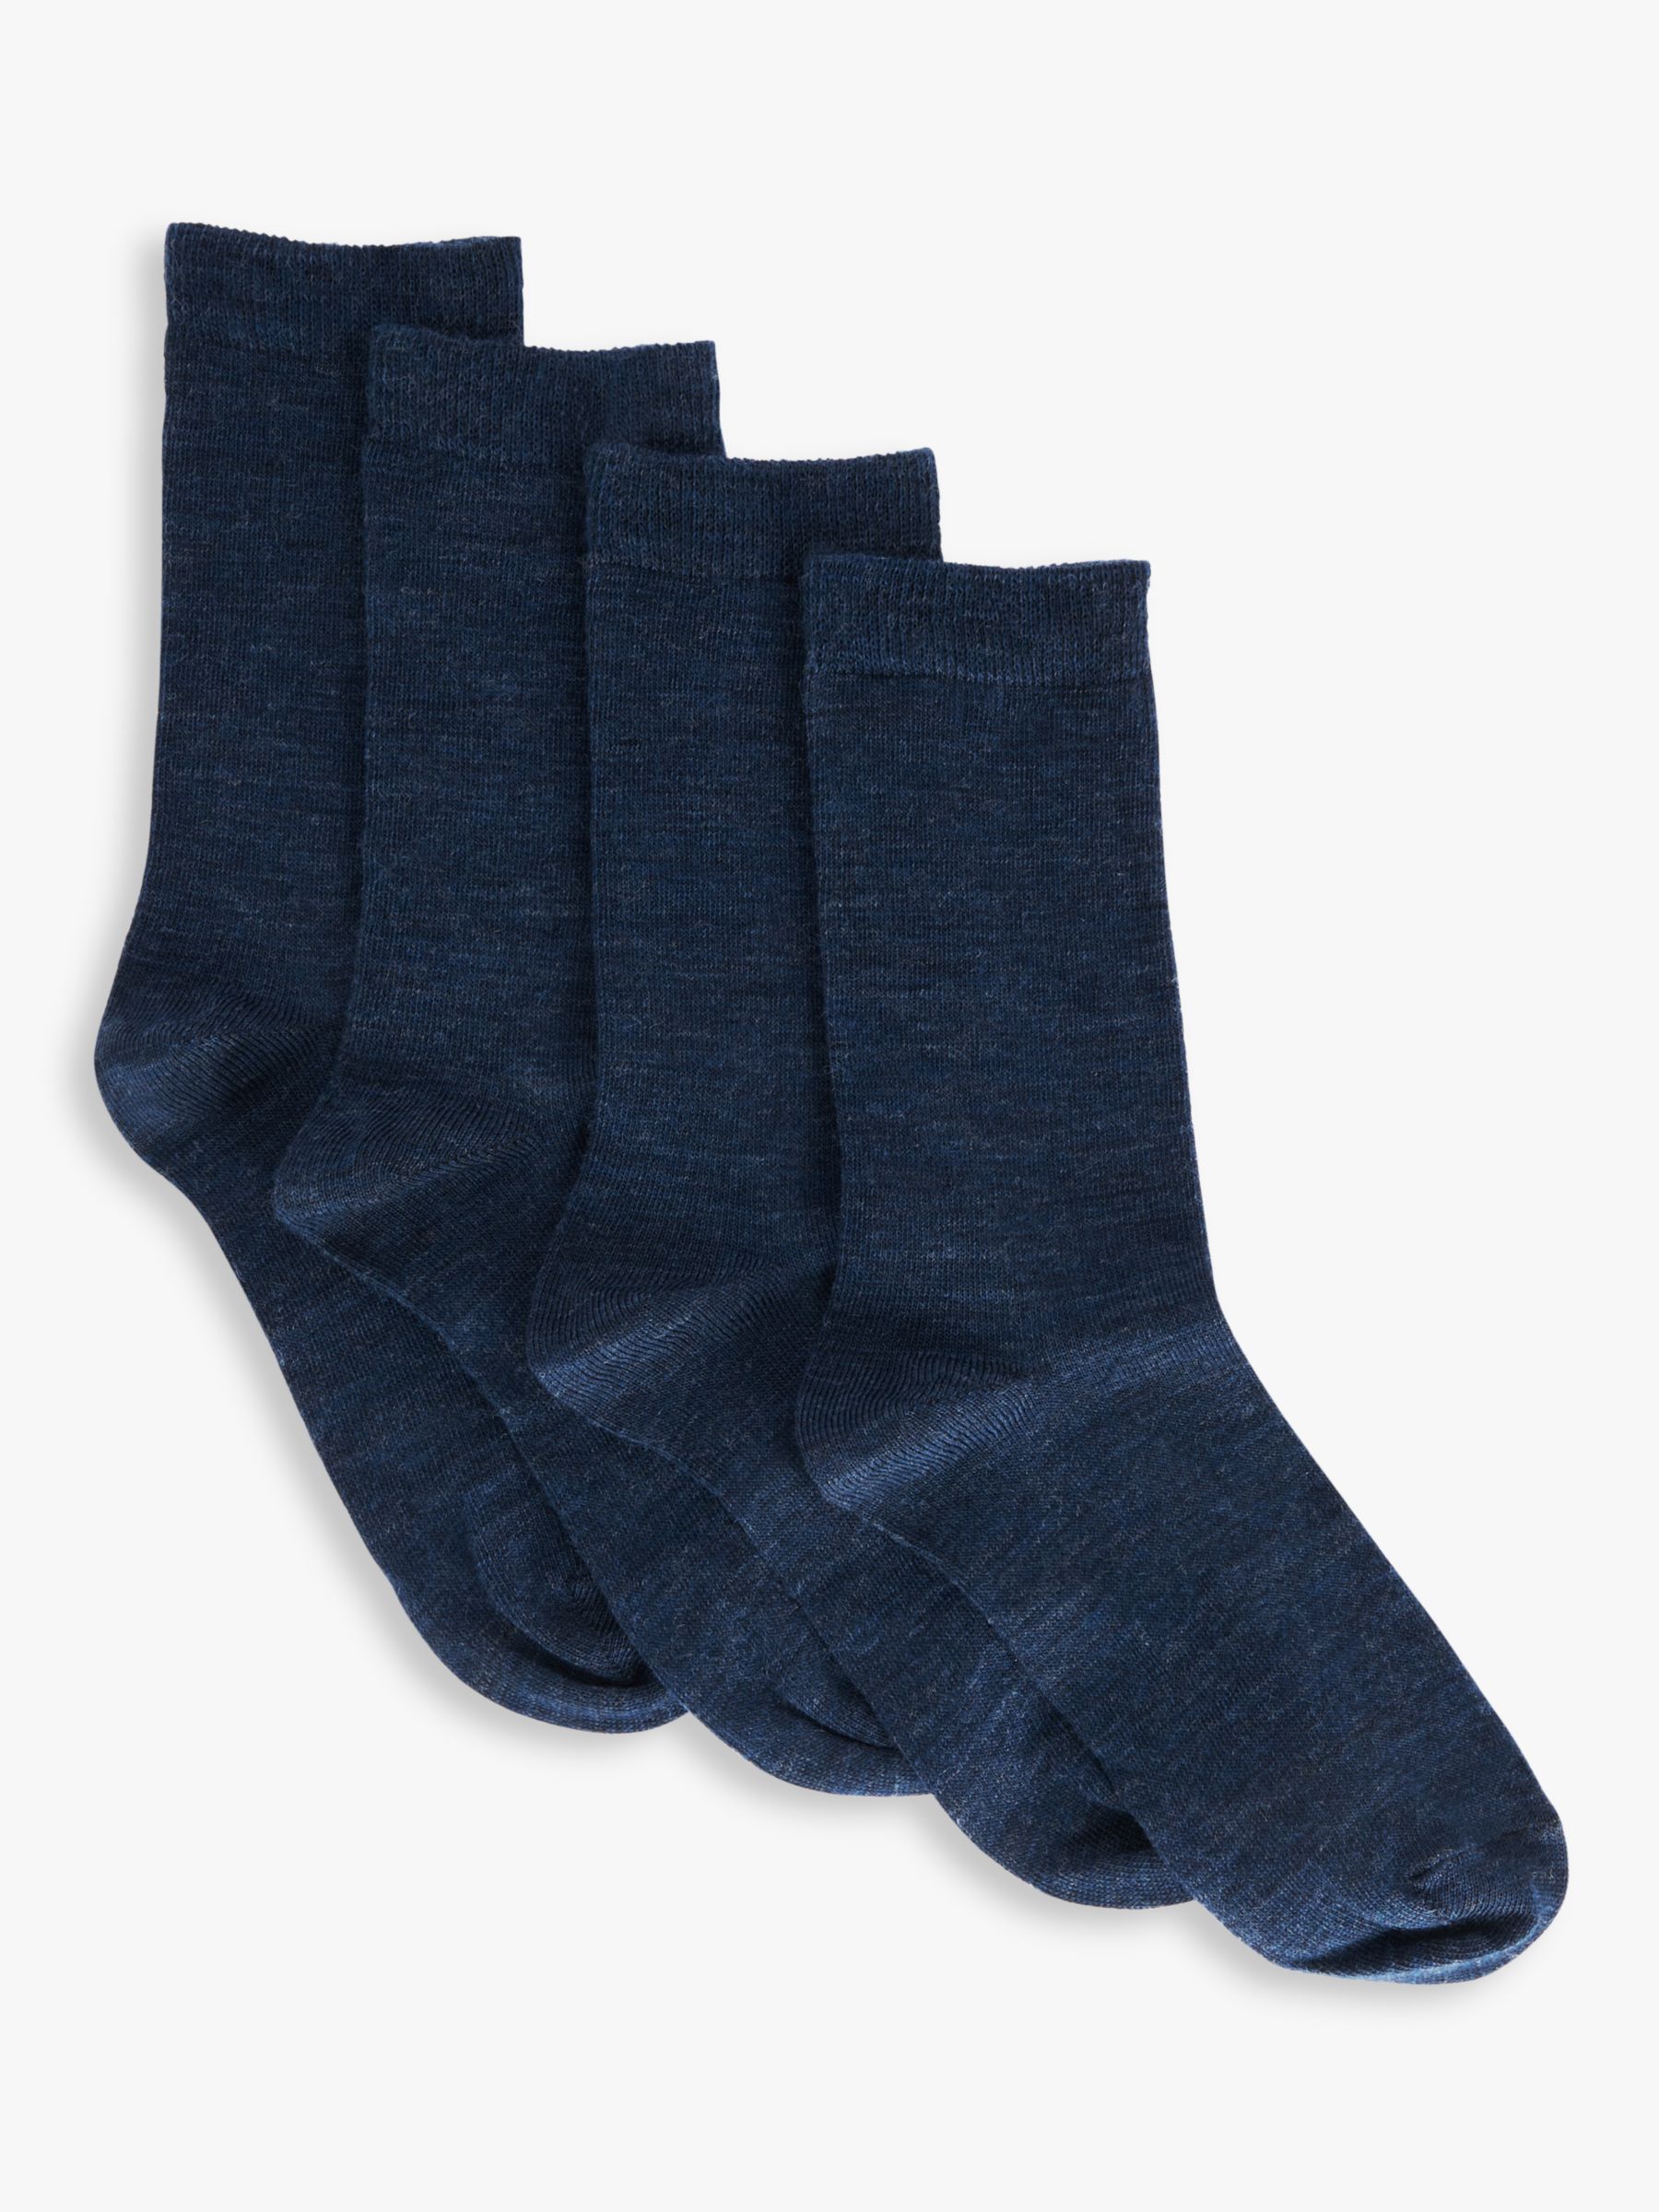 John Lewis Merino Wool Mix Ankle Socks, Pack of 2, Navy Melange at John ...